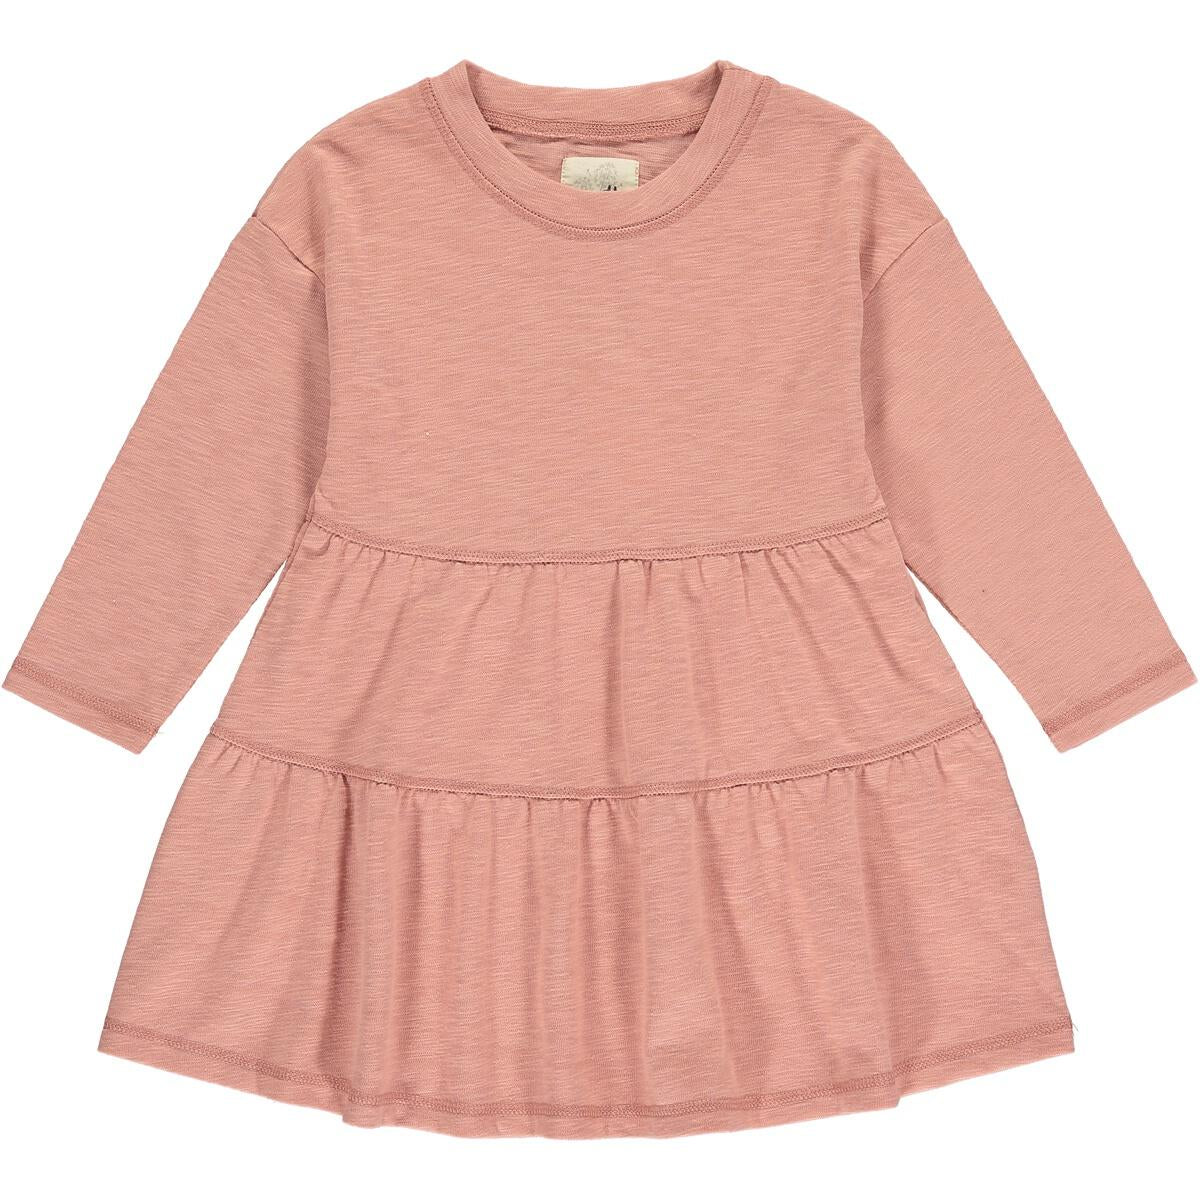 covelJune Tiered Tunic Dress - Peach - Premium dress from Vignette - Just $26! Shop now at covelgirls, Kids, kids dresses, Toddlercovel